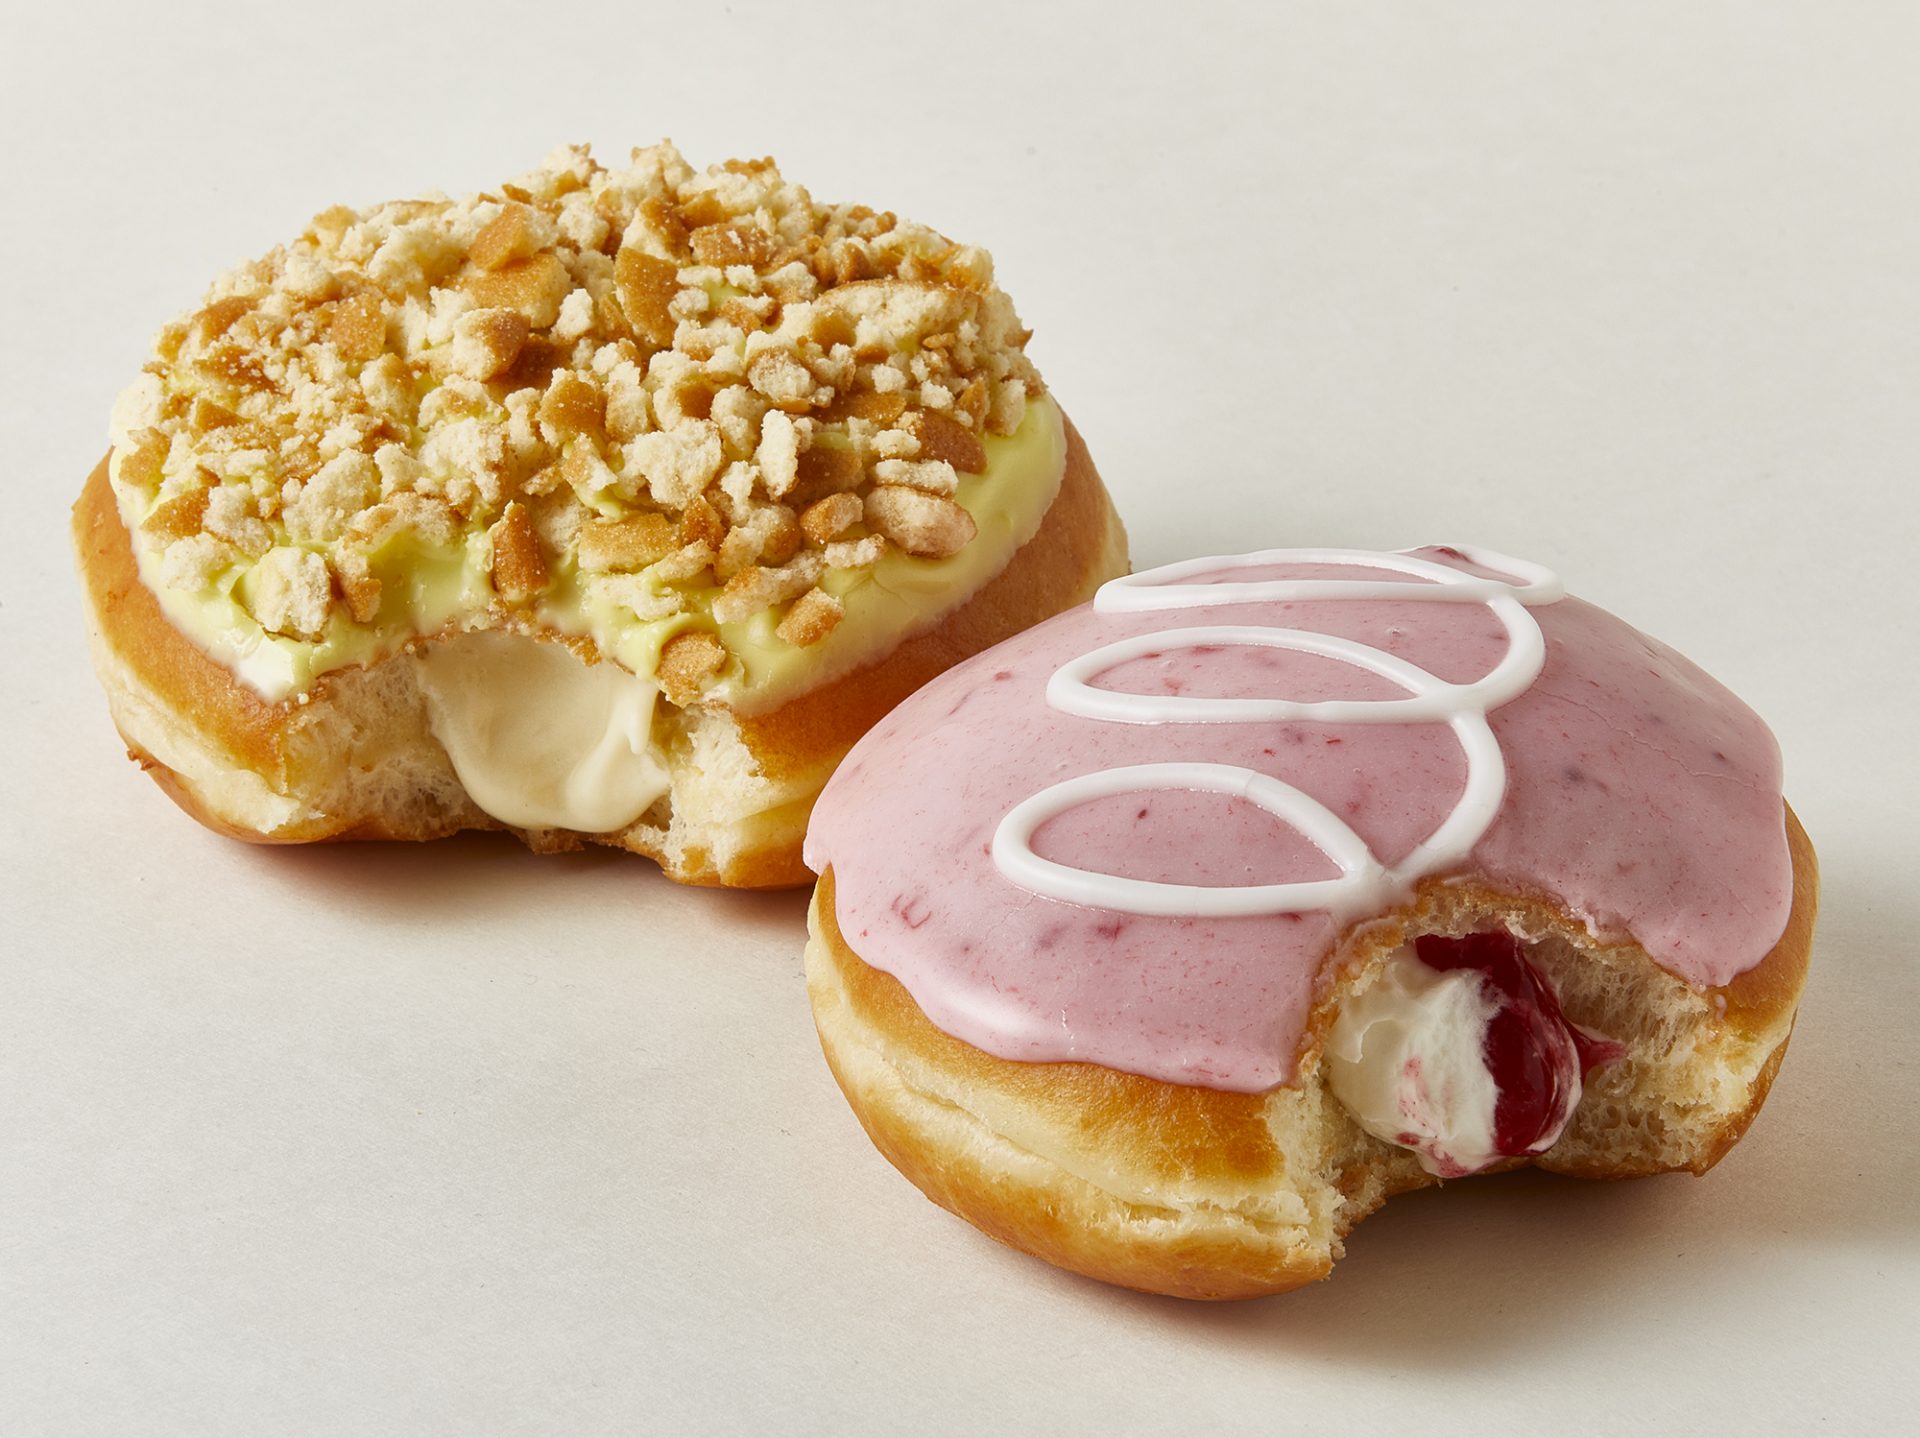 Krispy Kreme Doughnuts Puts A Sweet Twist On Two American Summertime